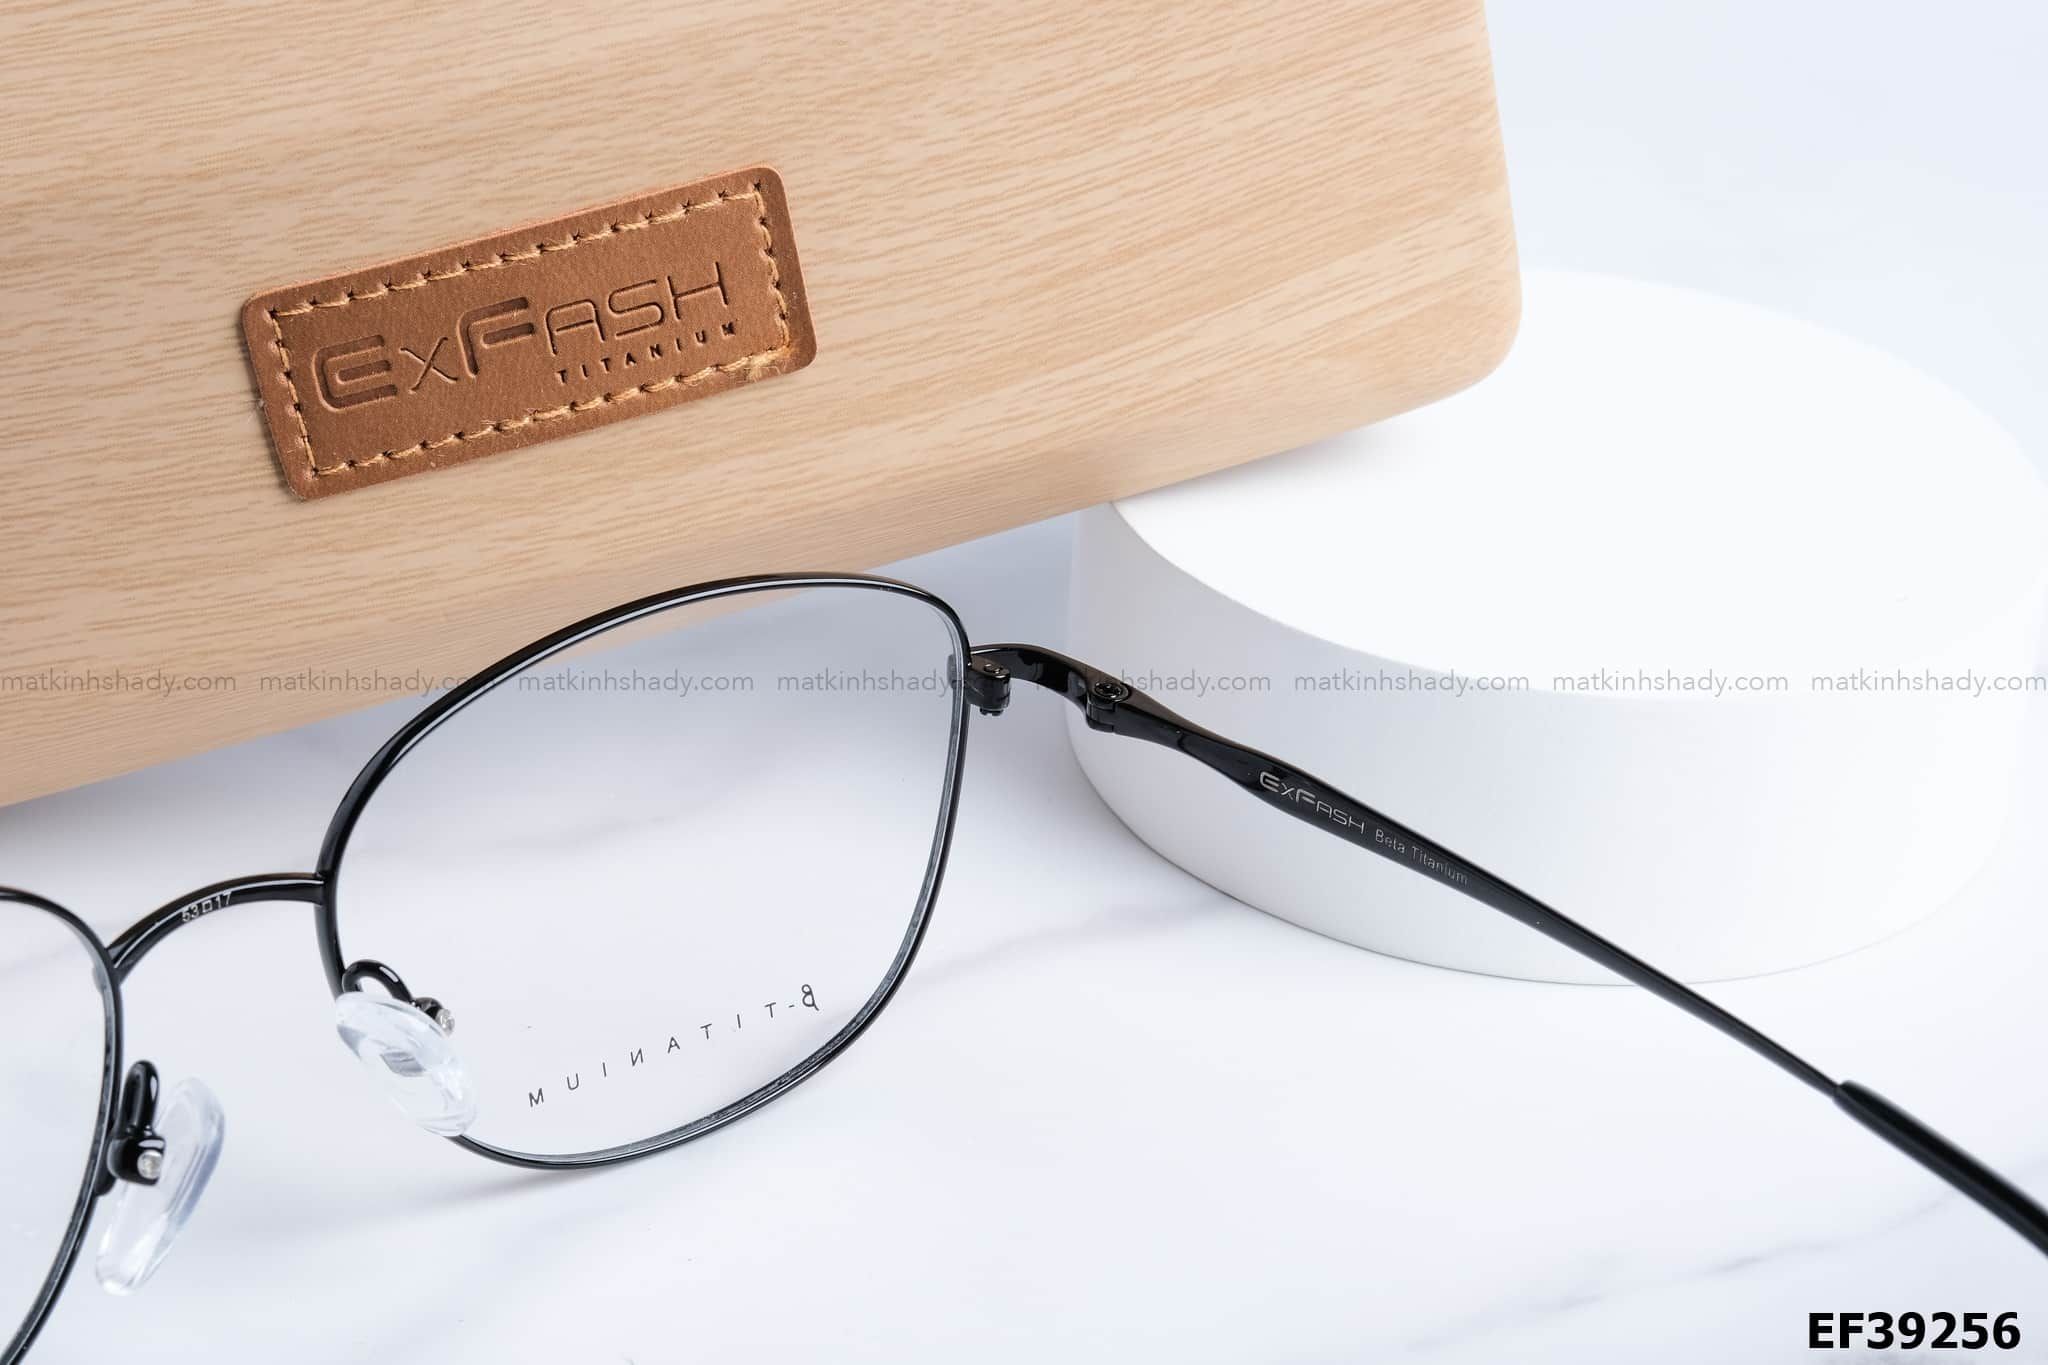  Exfash Eyewear - Glasses - EF39256 